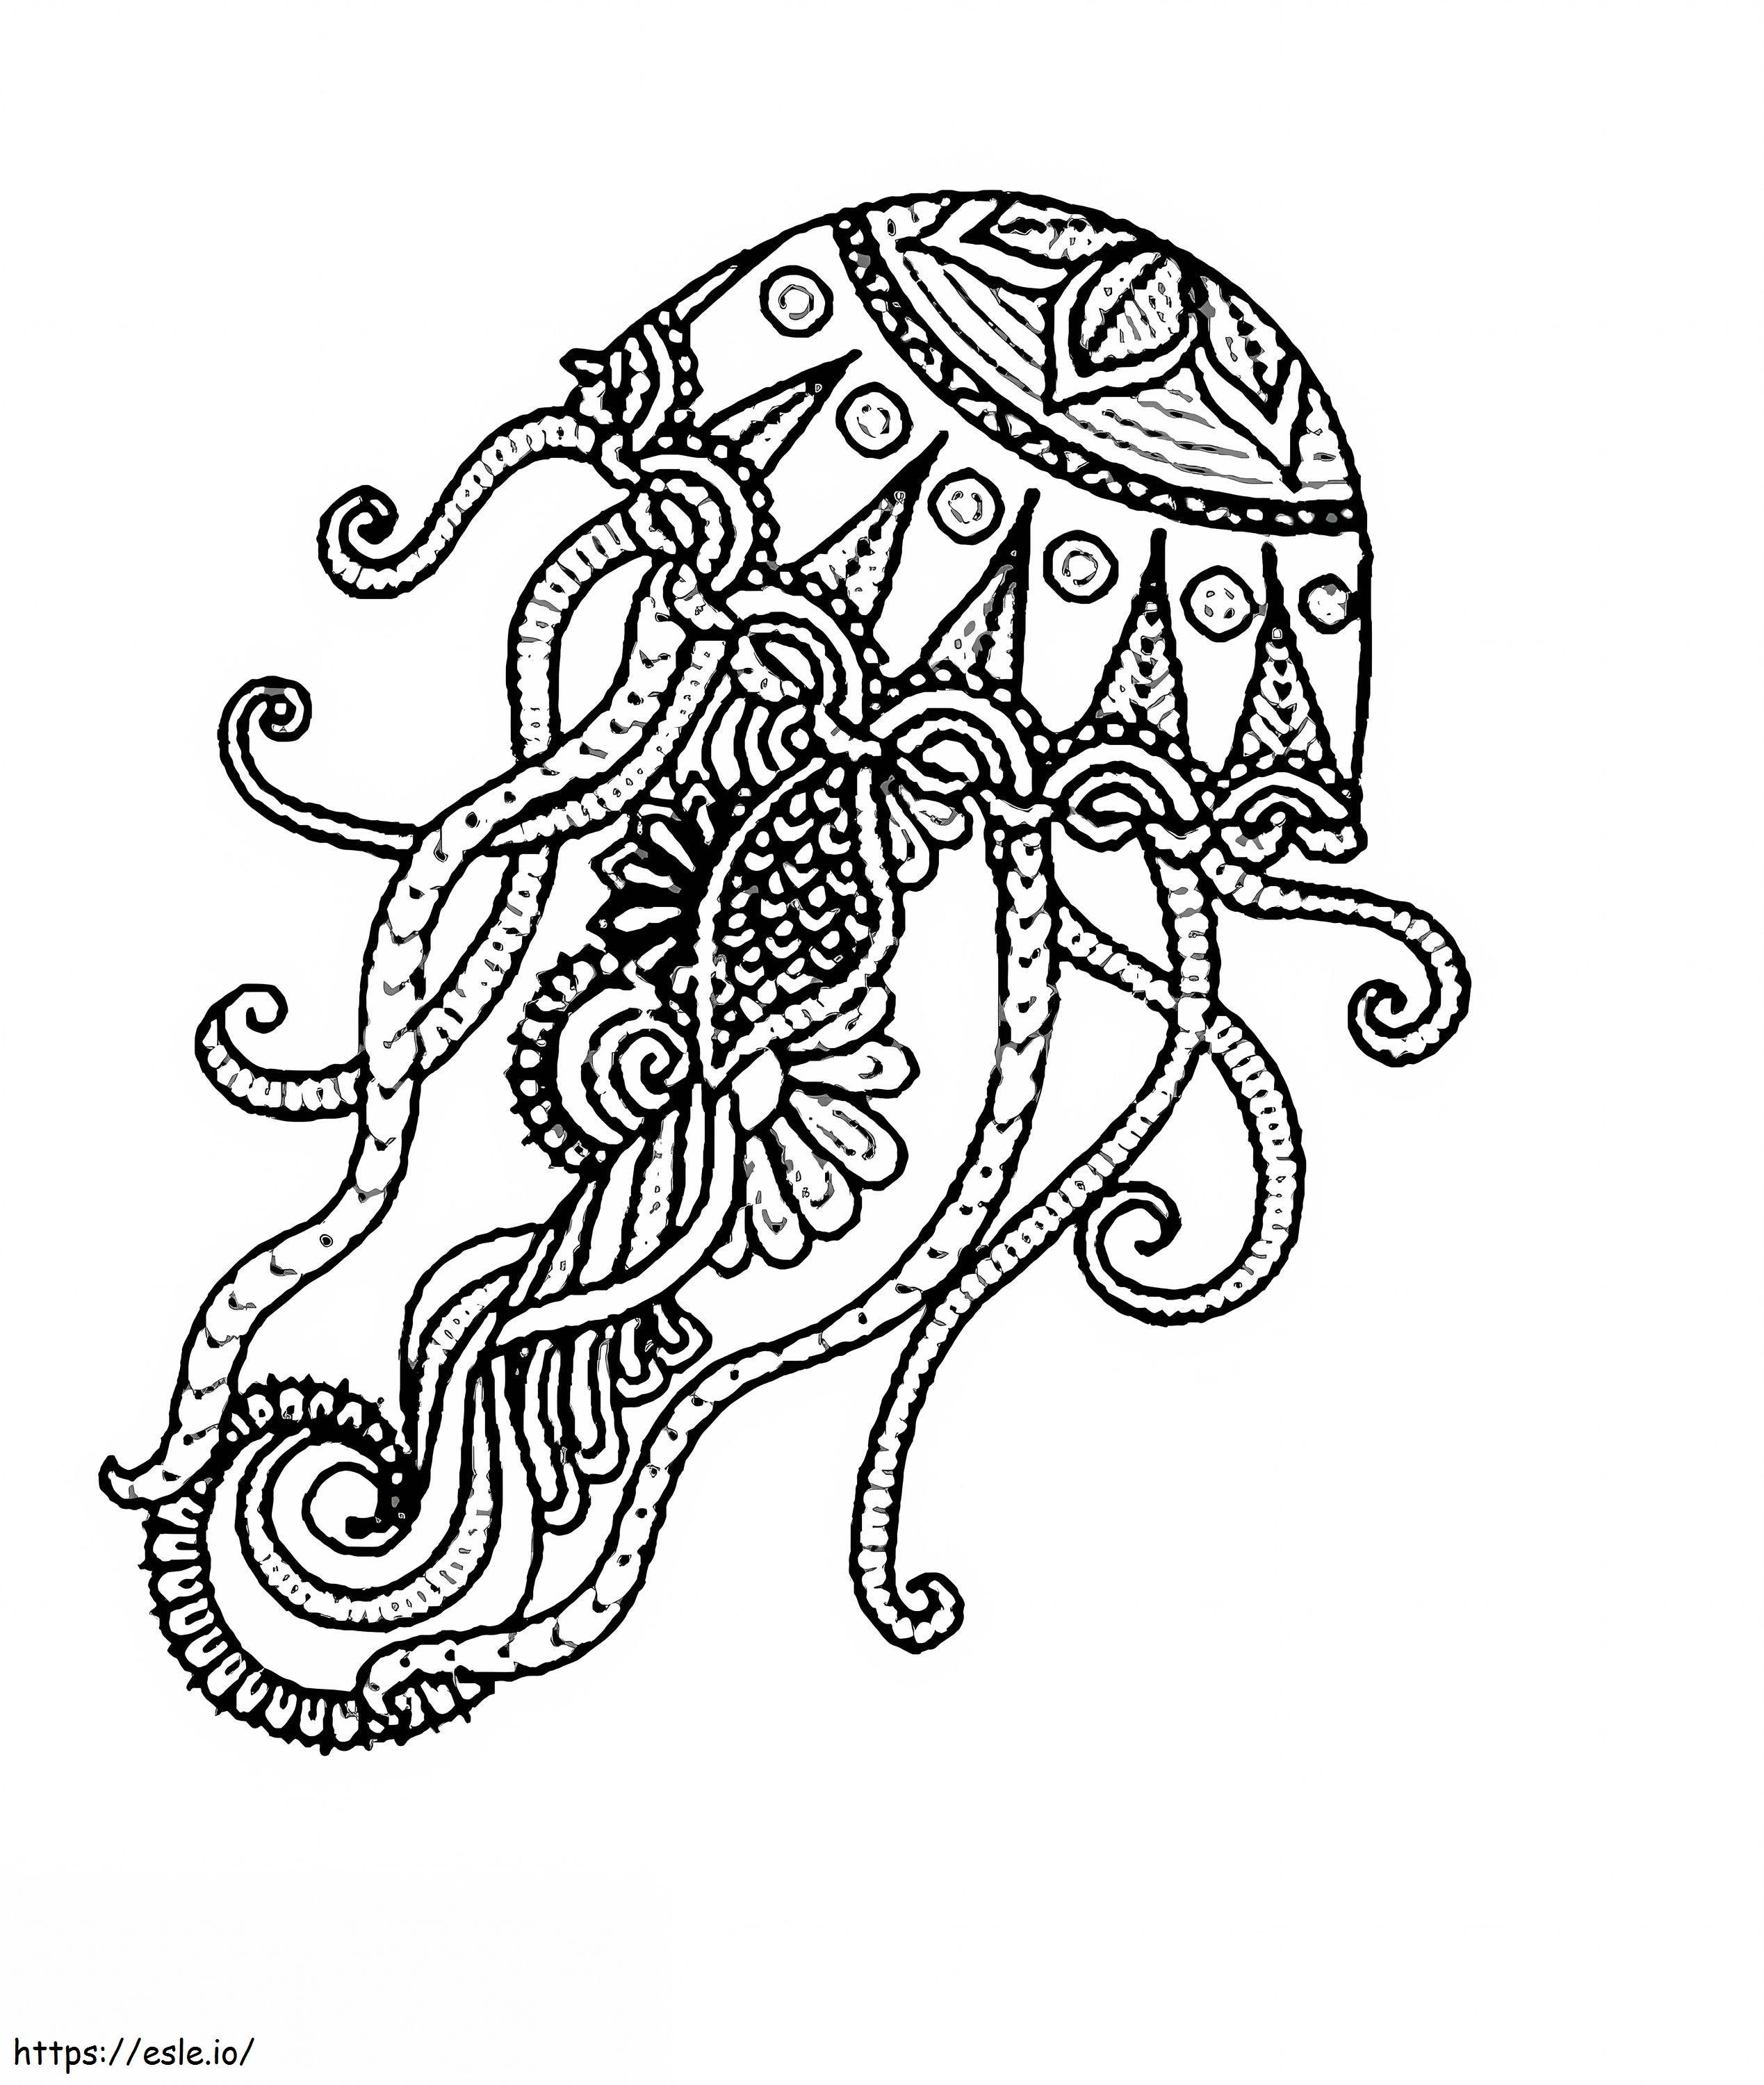 Dorosła meduza kolorowanka